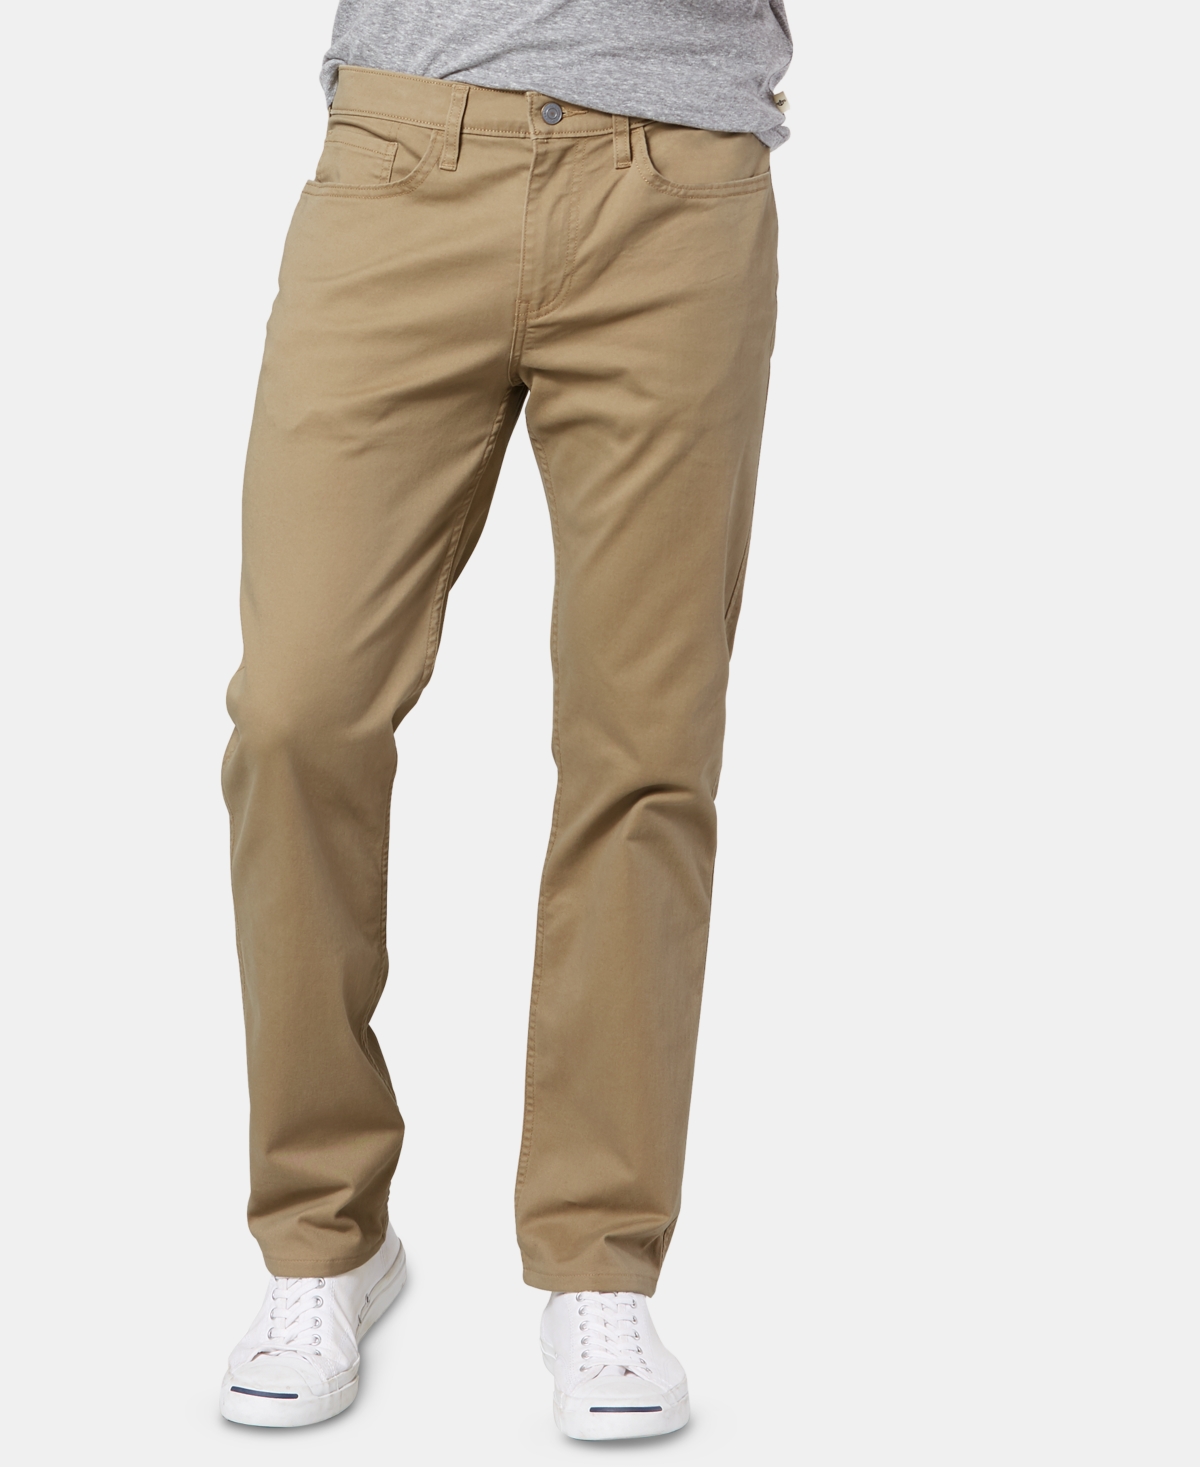 Men's Jean Cut Straight-Fit All Seasons Tech Khaki Pants - Blue Fusion